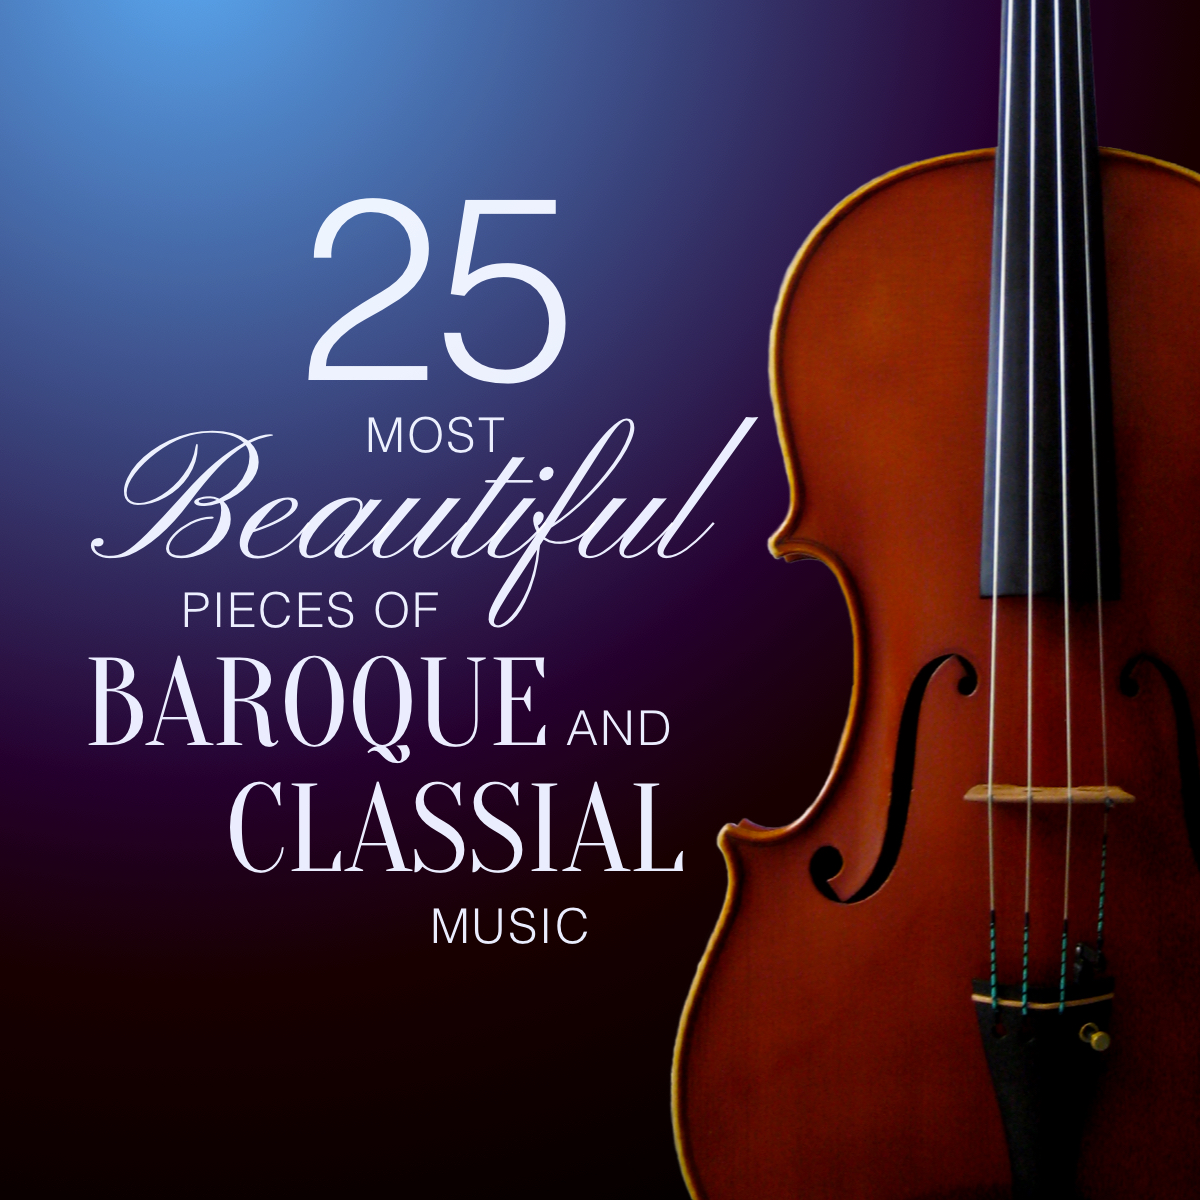 Baroque music vs classical music